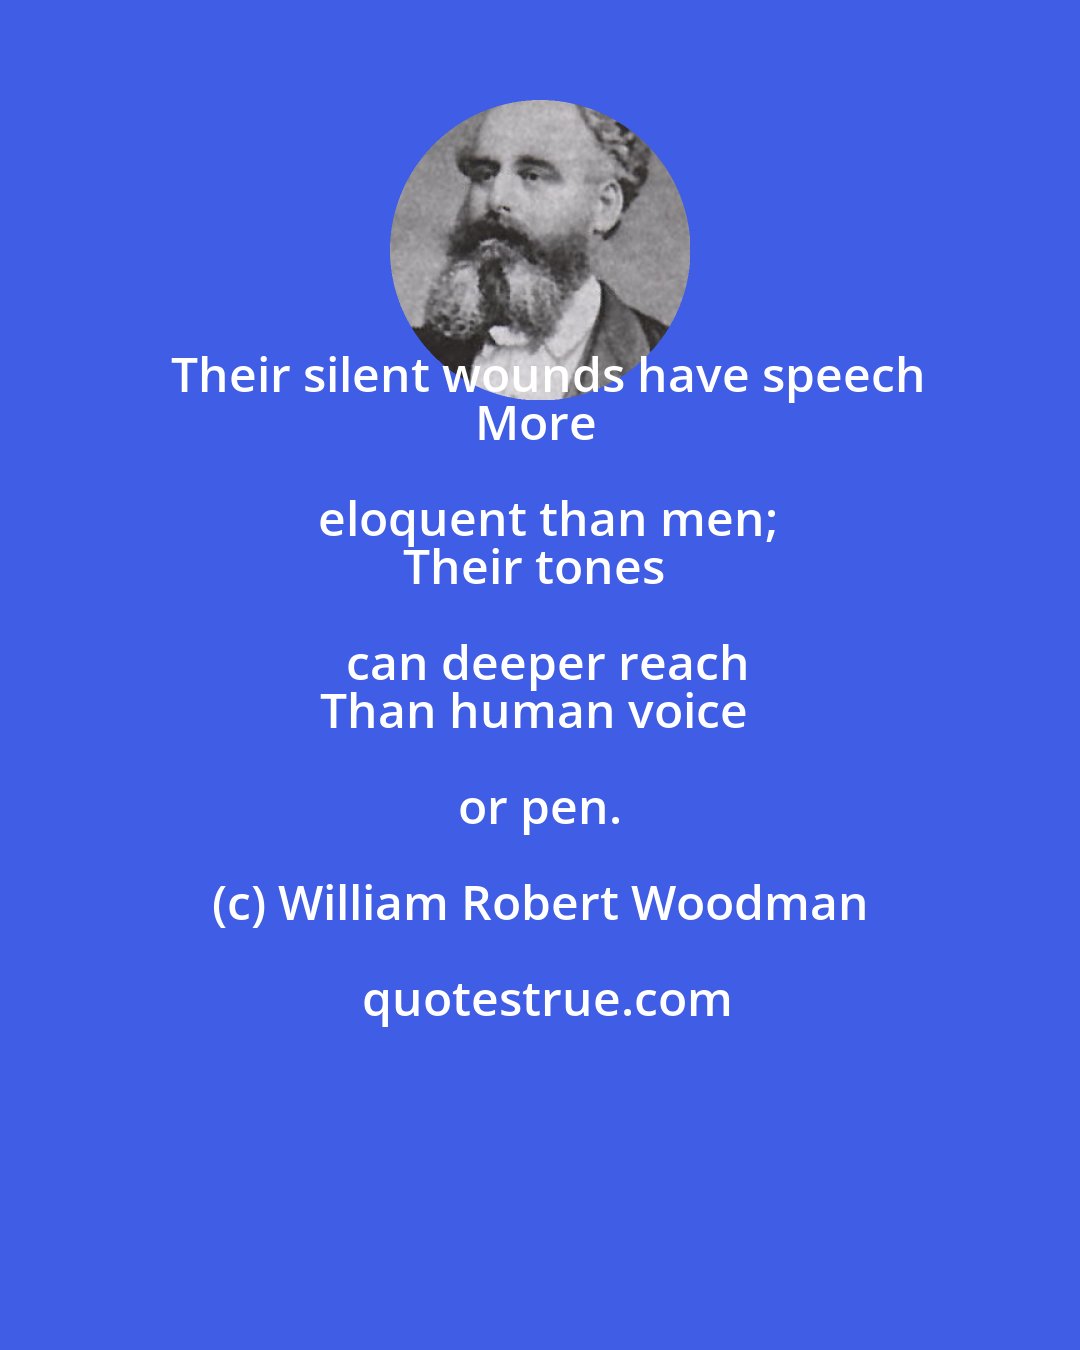 William Robert Woodman: Their silent wounds have speech
More eloquent than men;
Their tones can deeper reach
Than human voice or pen.